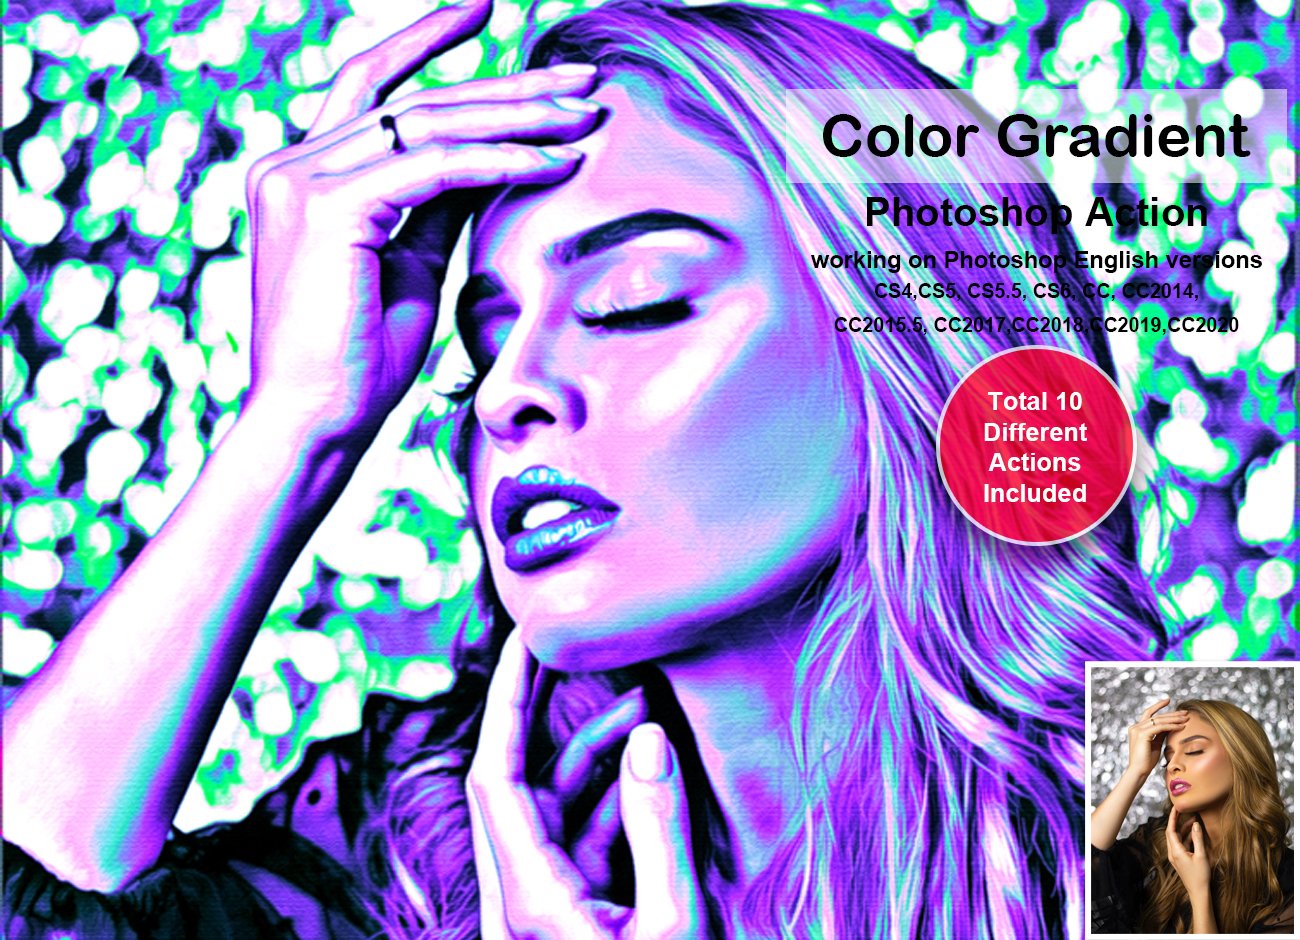 Color Gradient Photoshop Actioncover image.